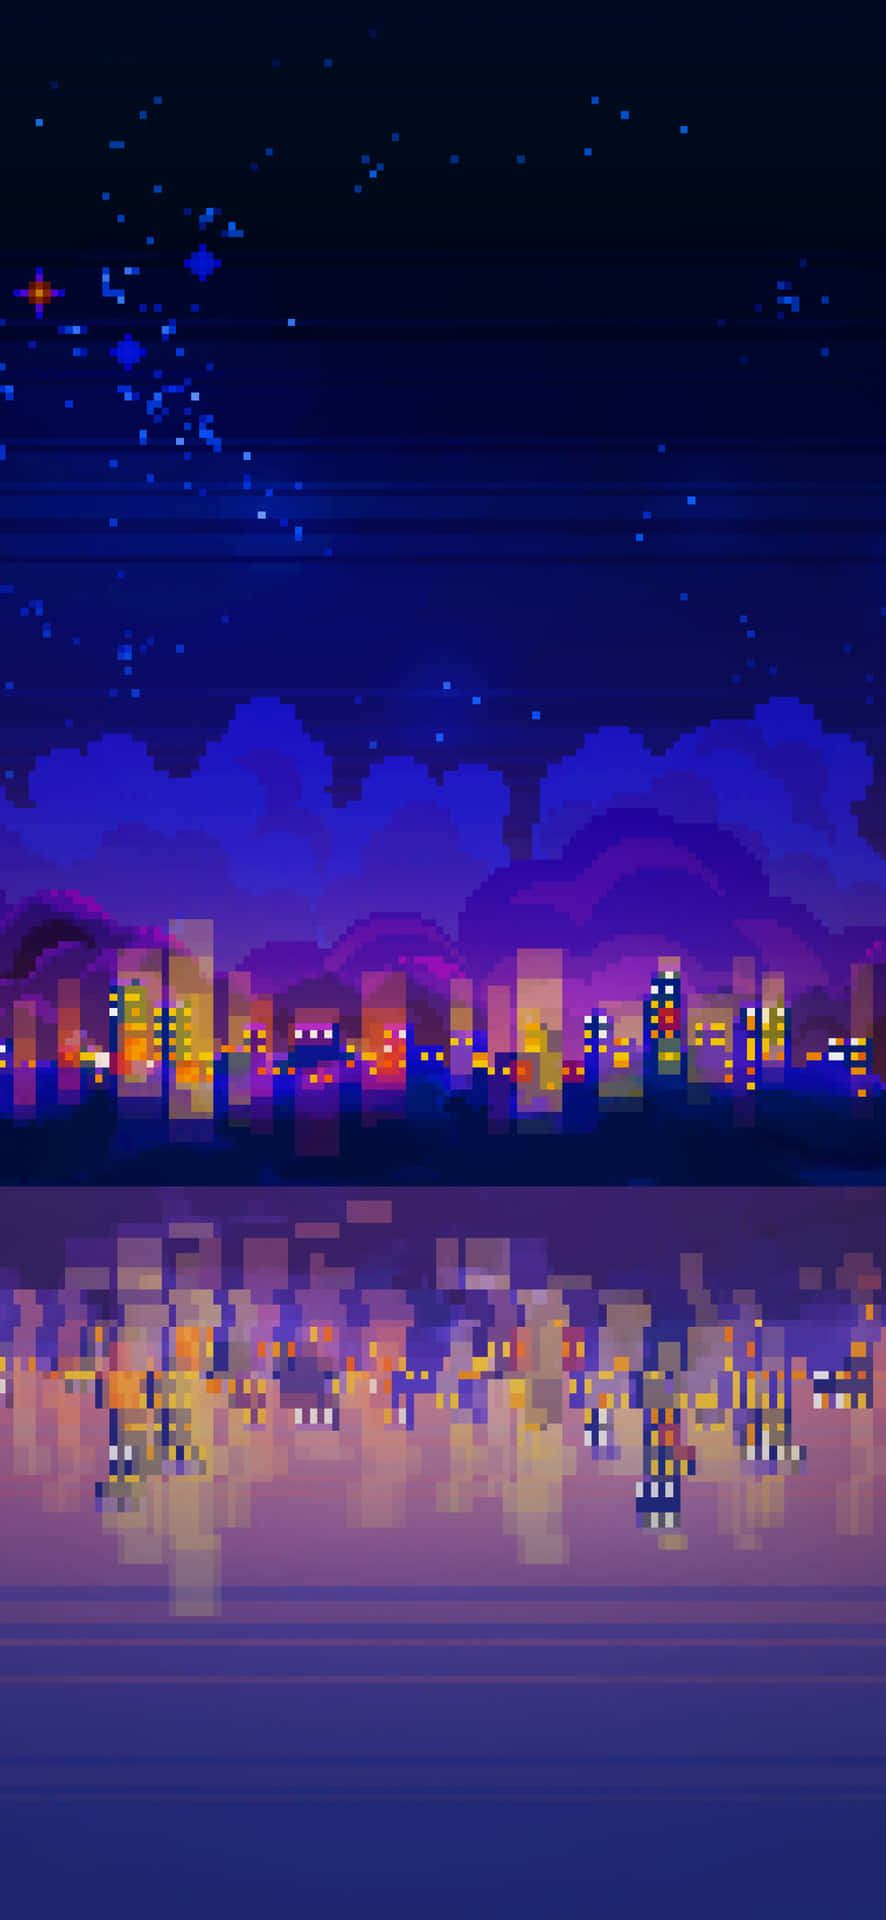 Pixelated Cityscape Night Reflection Wallpaper